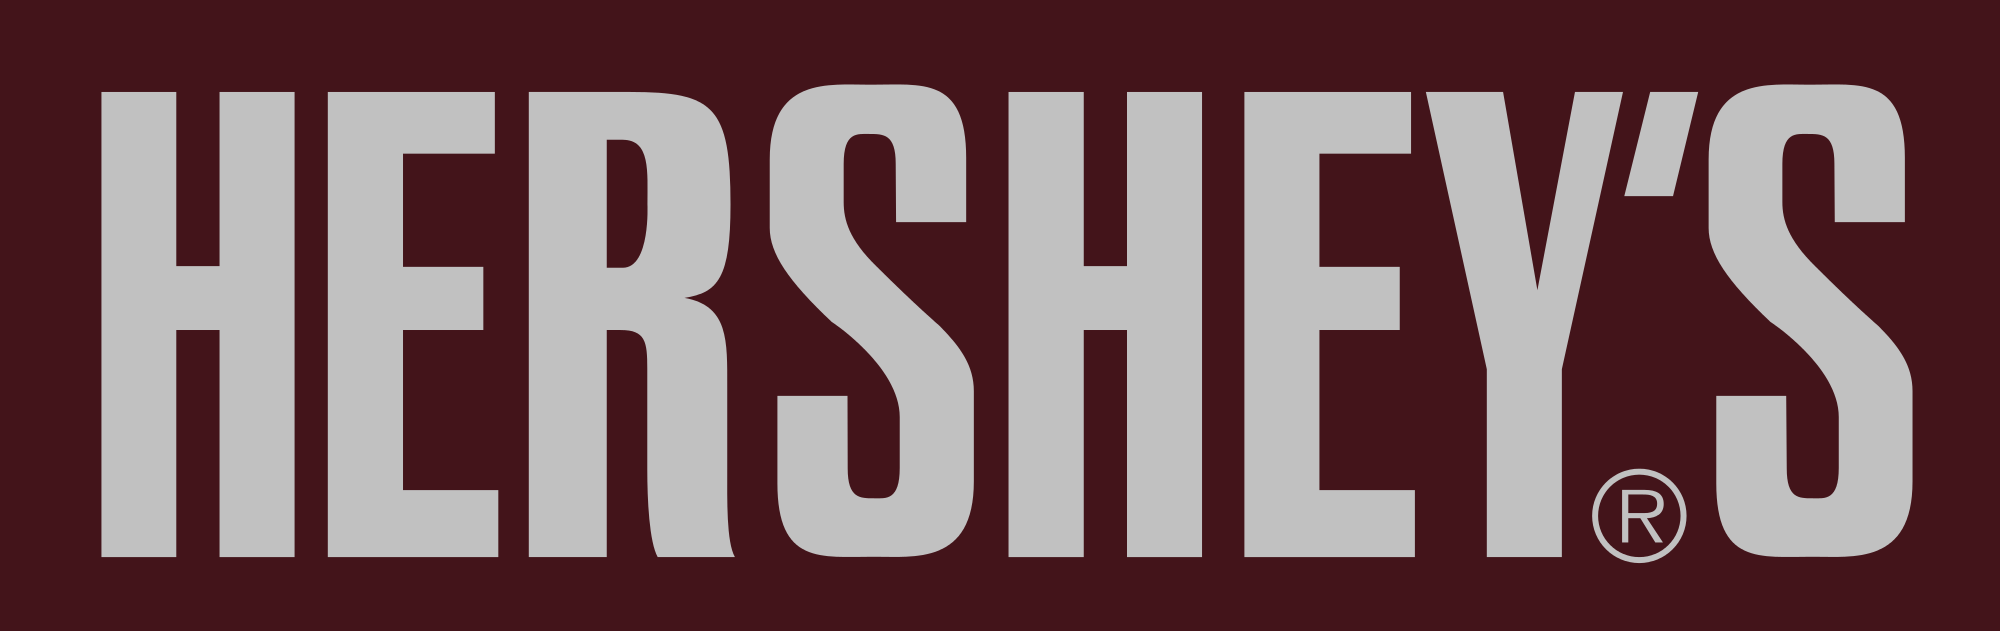 Hershey logo png PNG Image